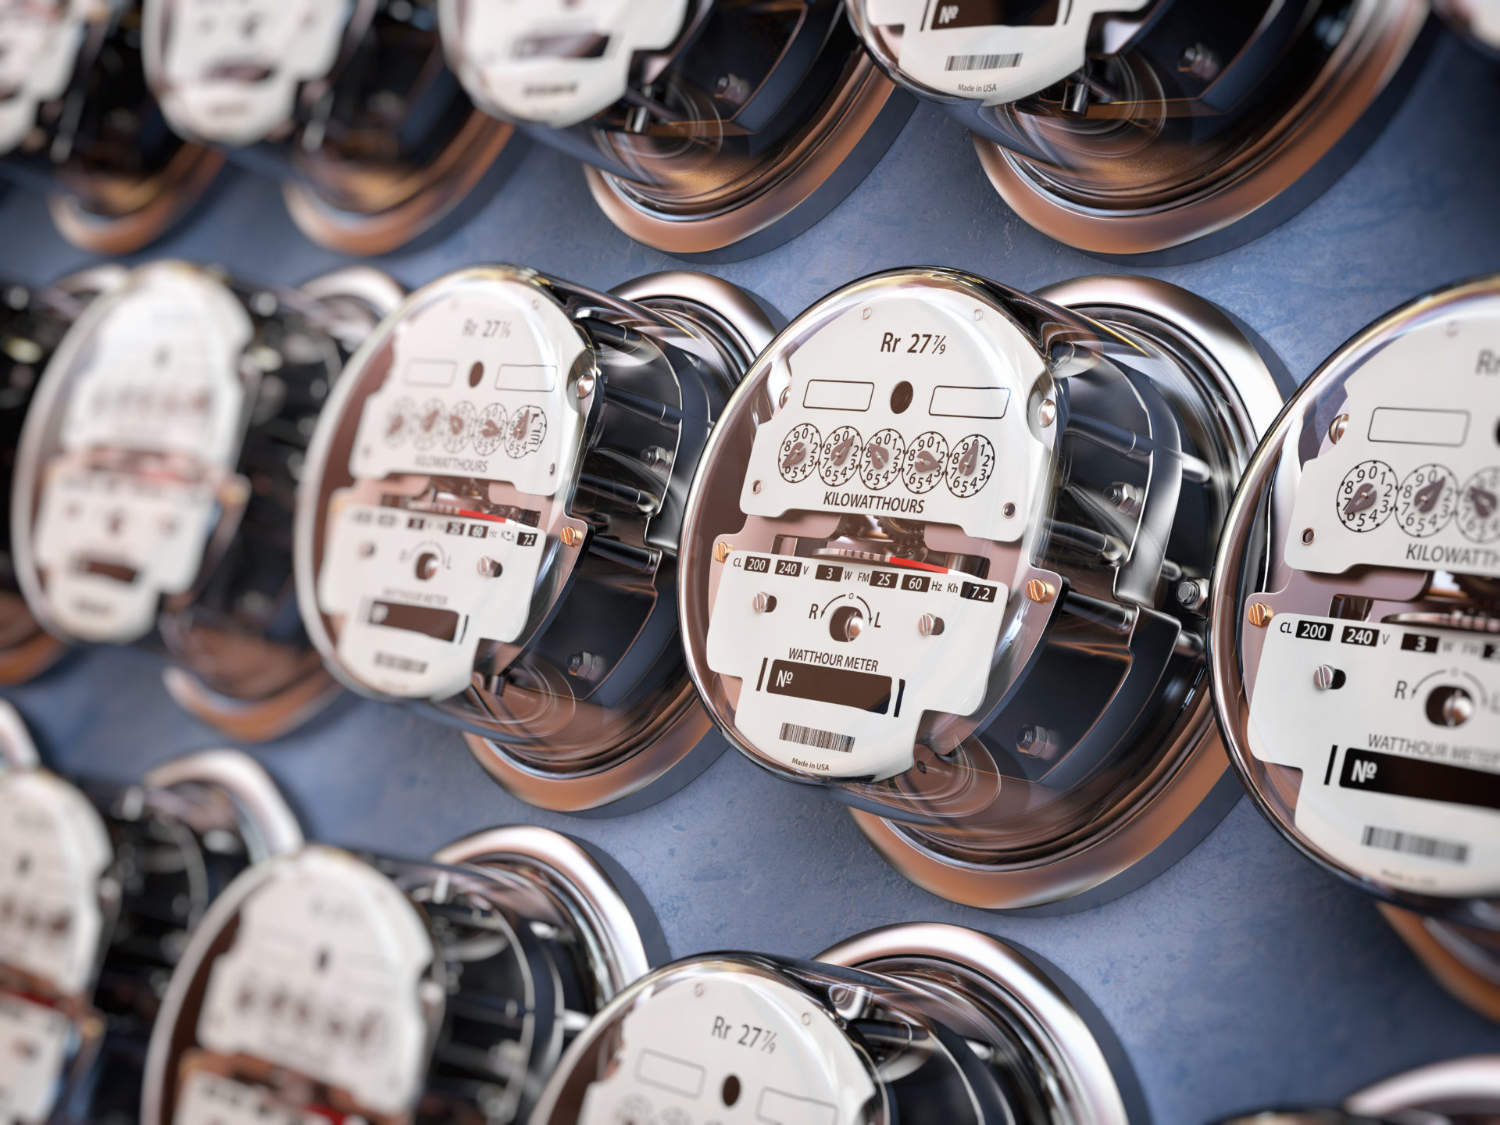 Rows of electric meters